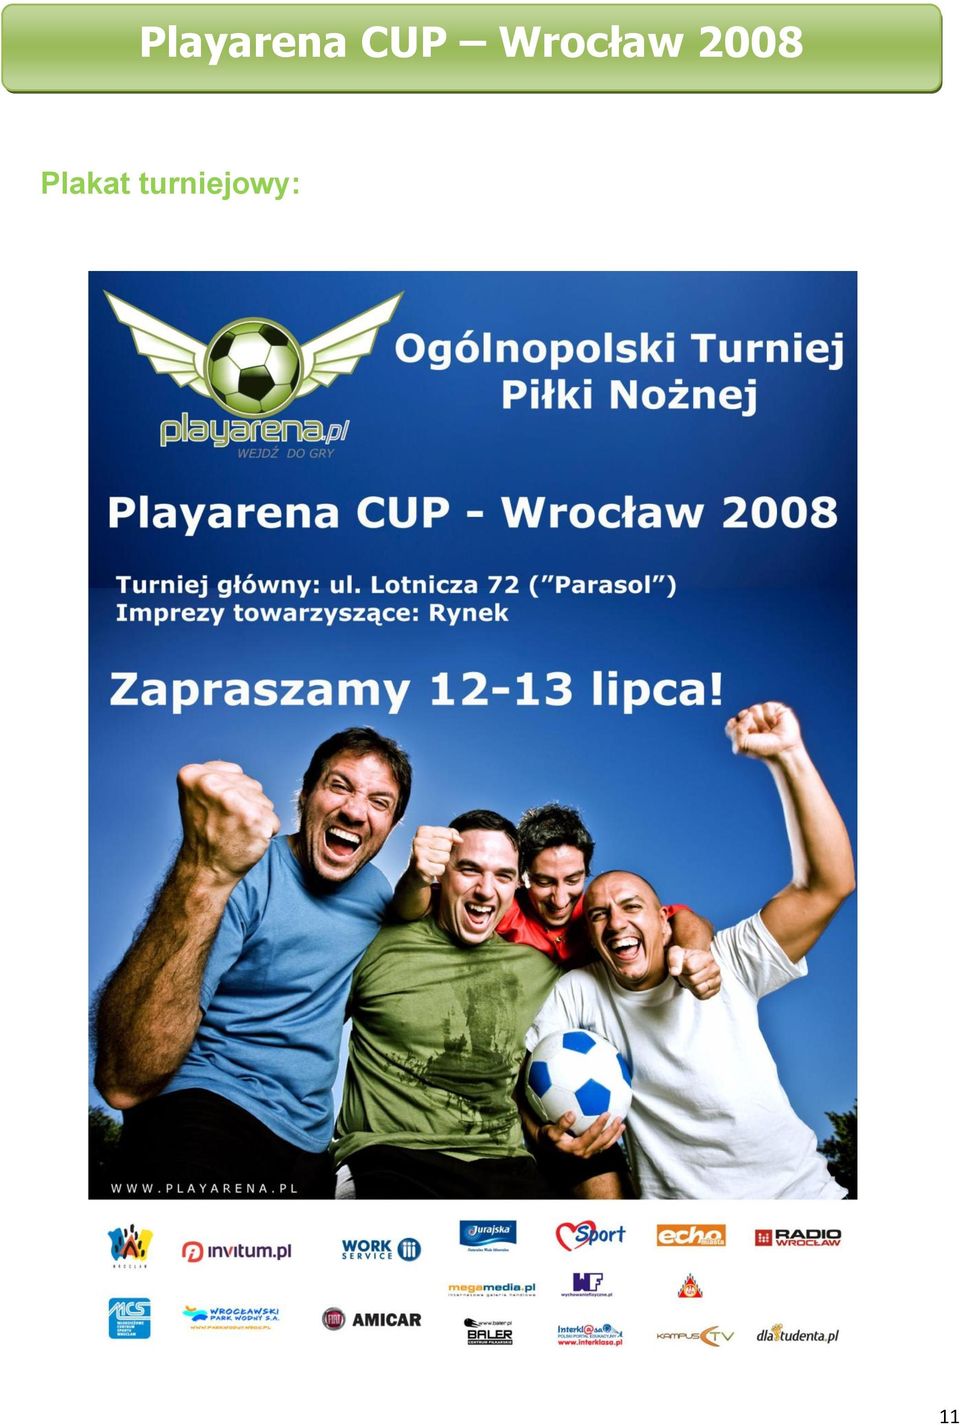 Playarena CUP